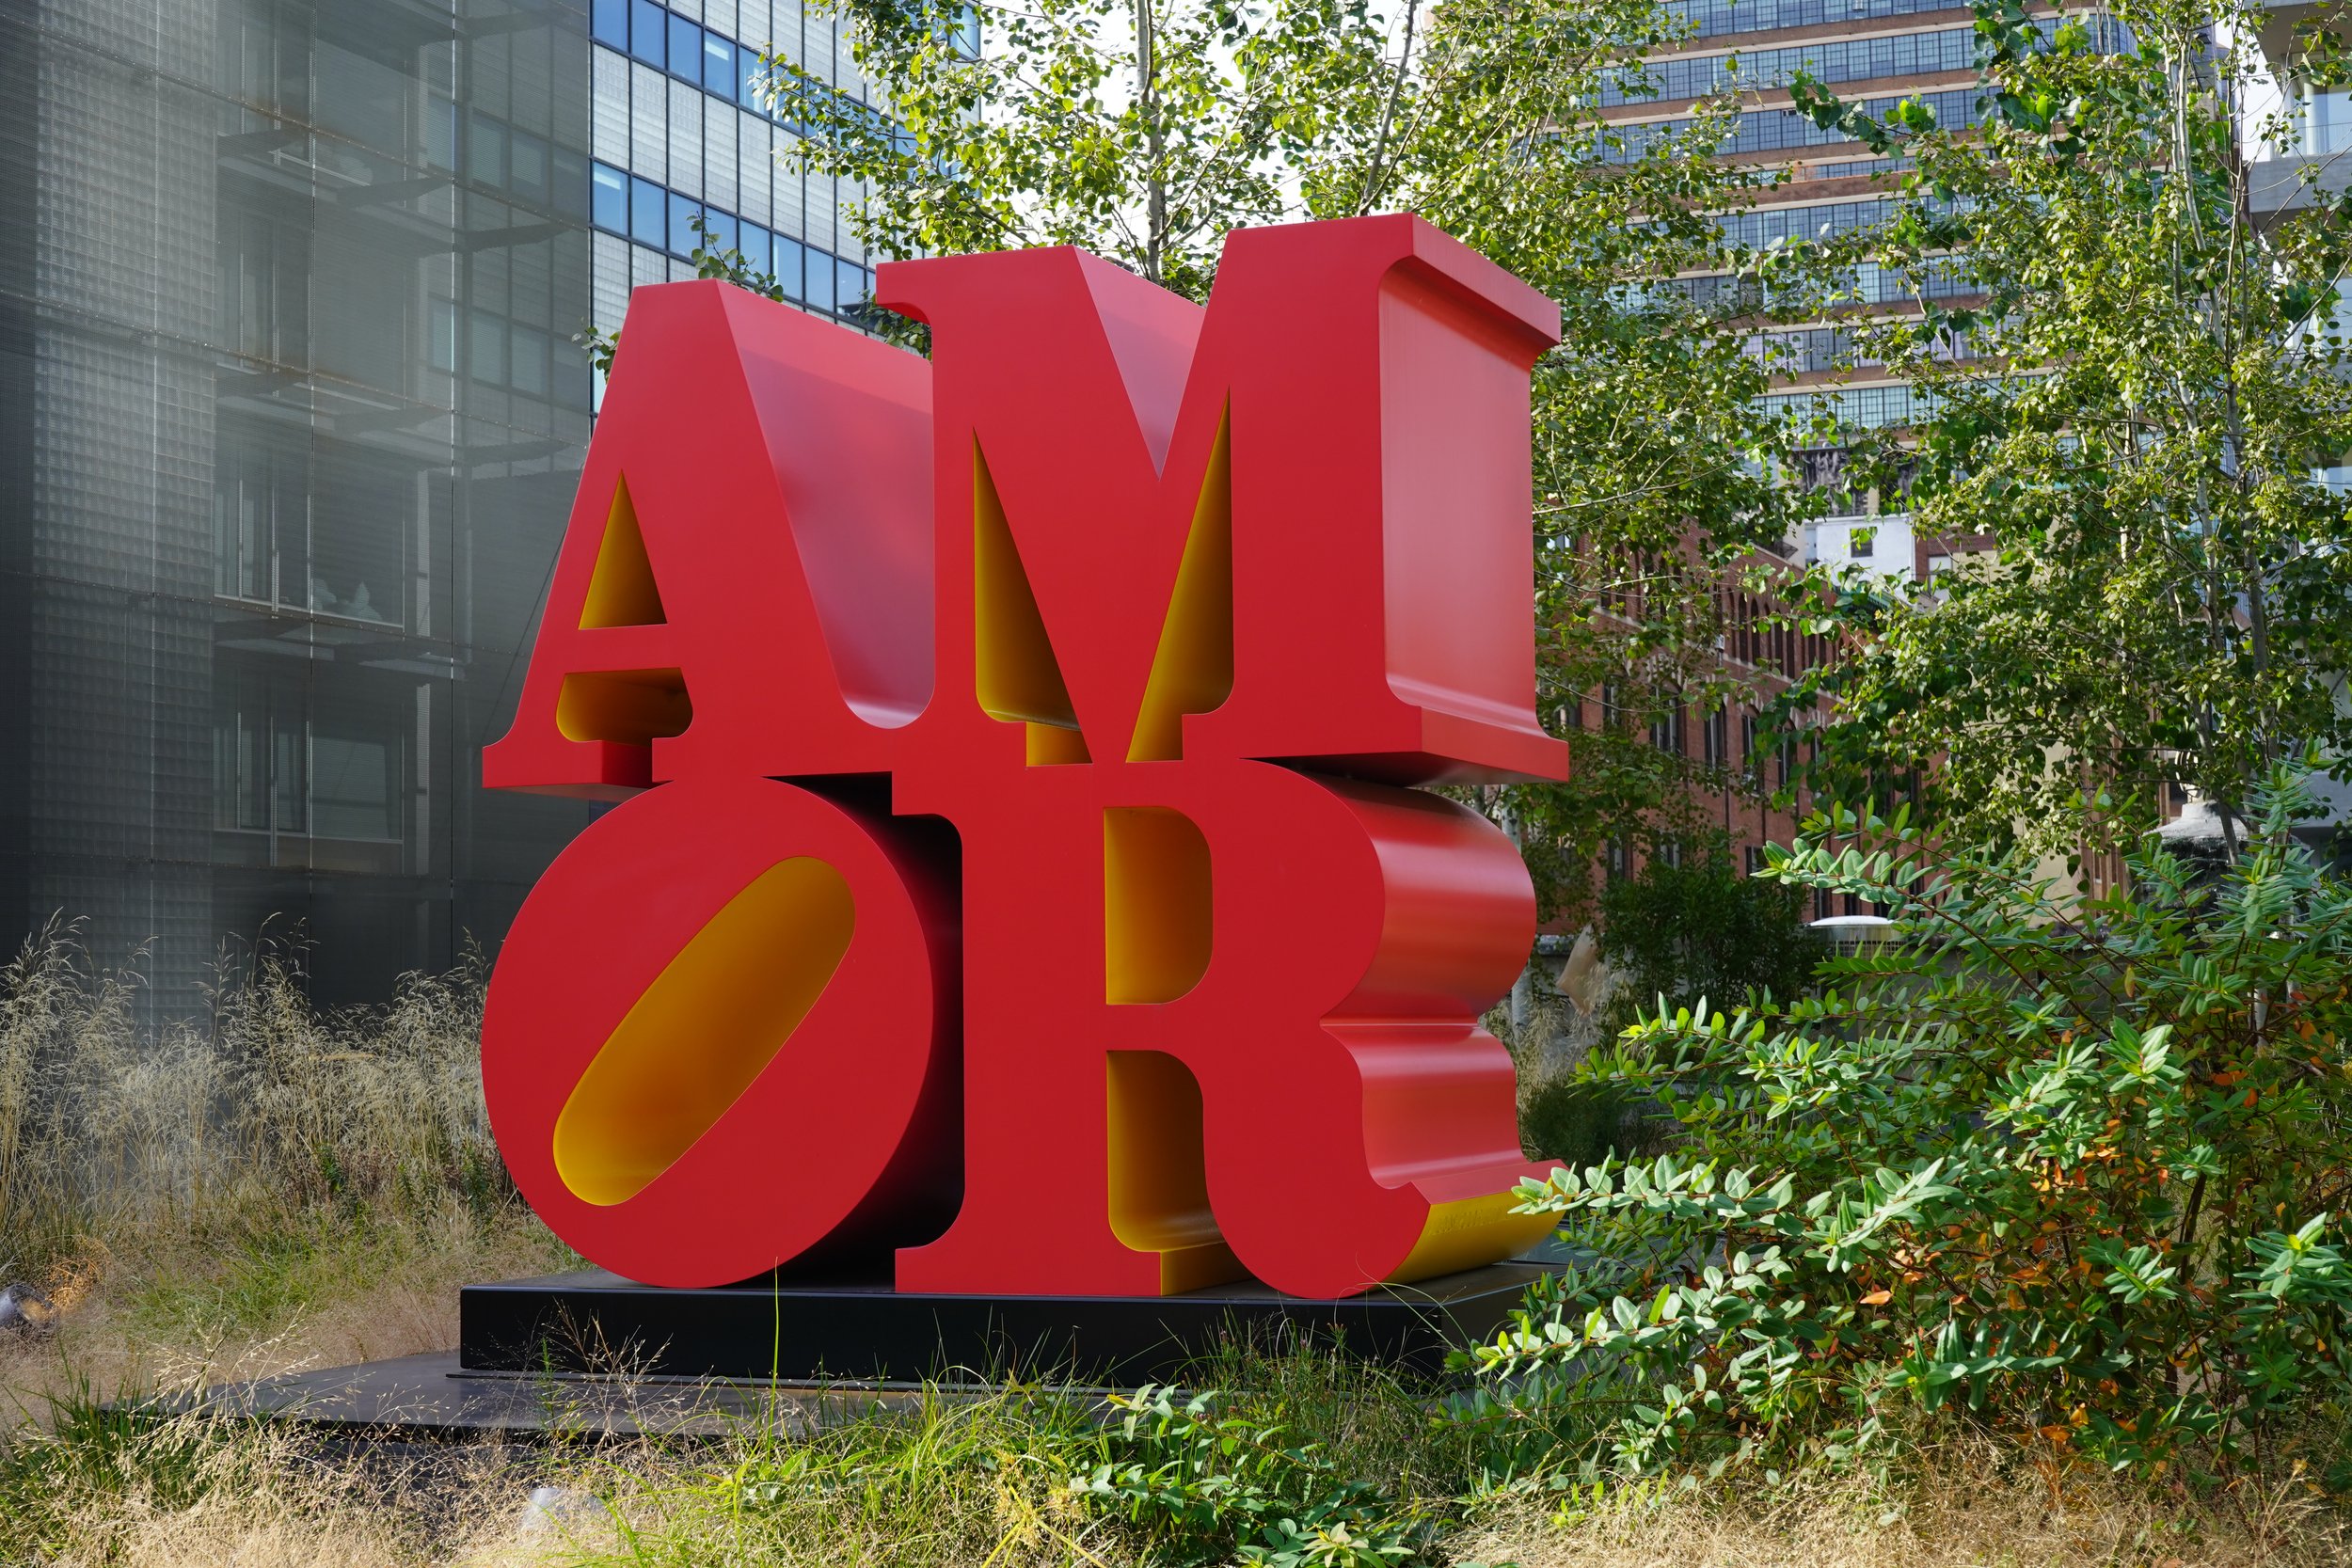 Amor sculpture Robert Indiana Highline.jpg